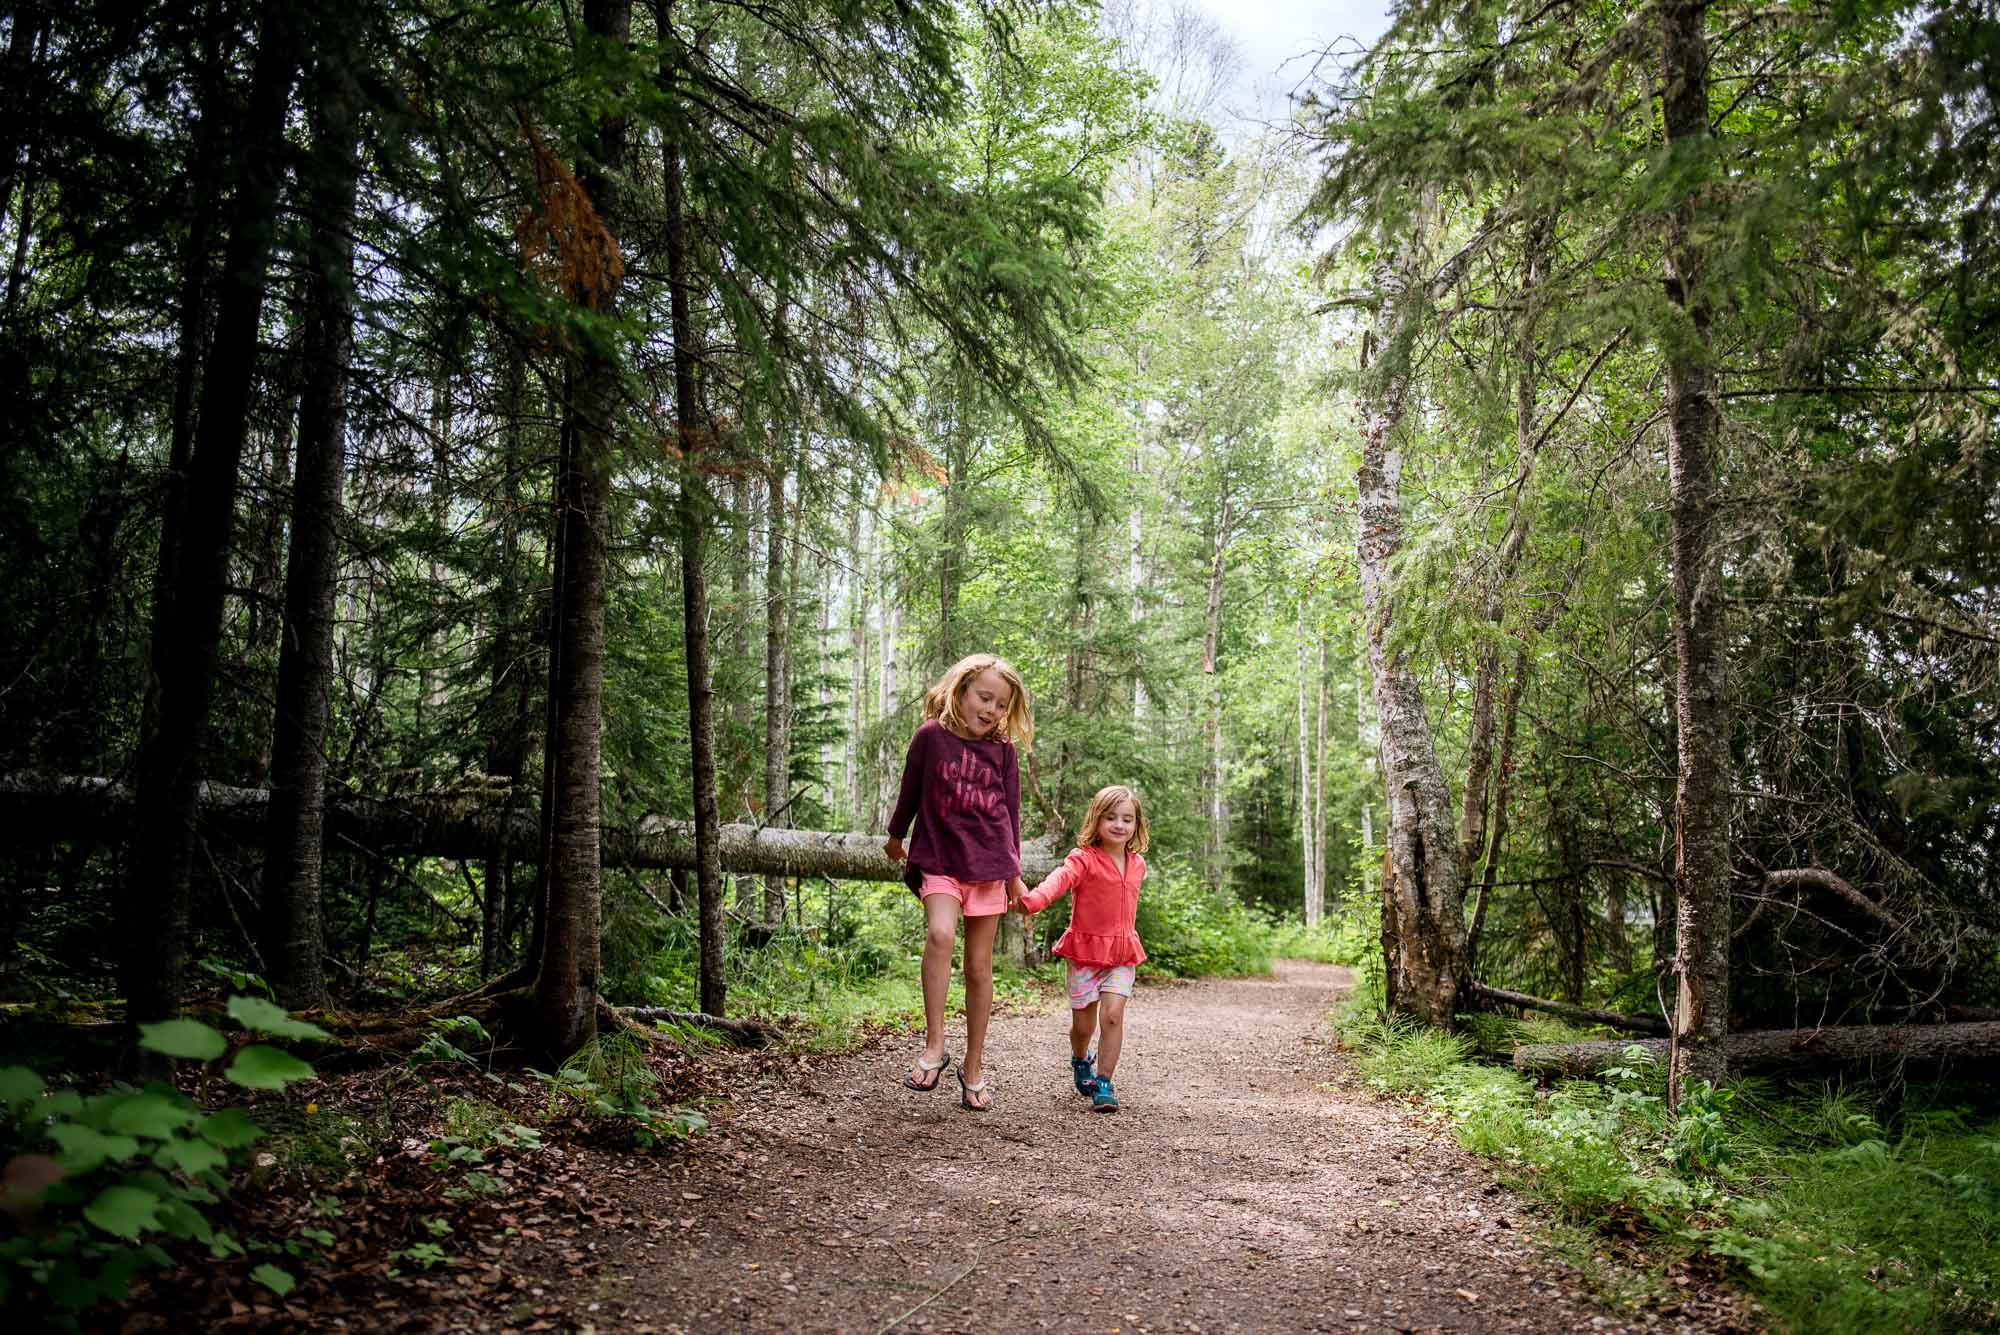 2 sisters skip through the forest at Carson Pegasus Provincial Campground near Edmonton and Whitecourt. 